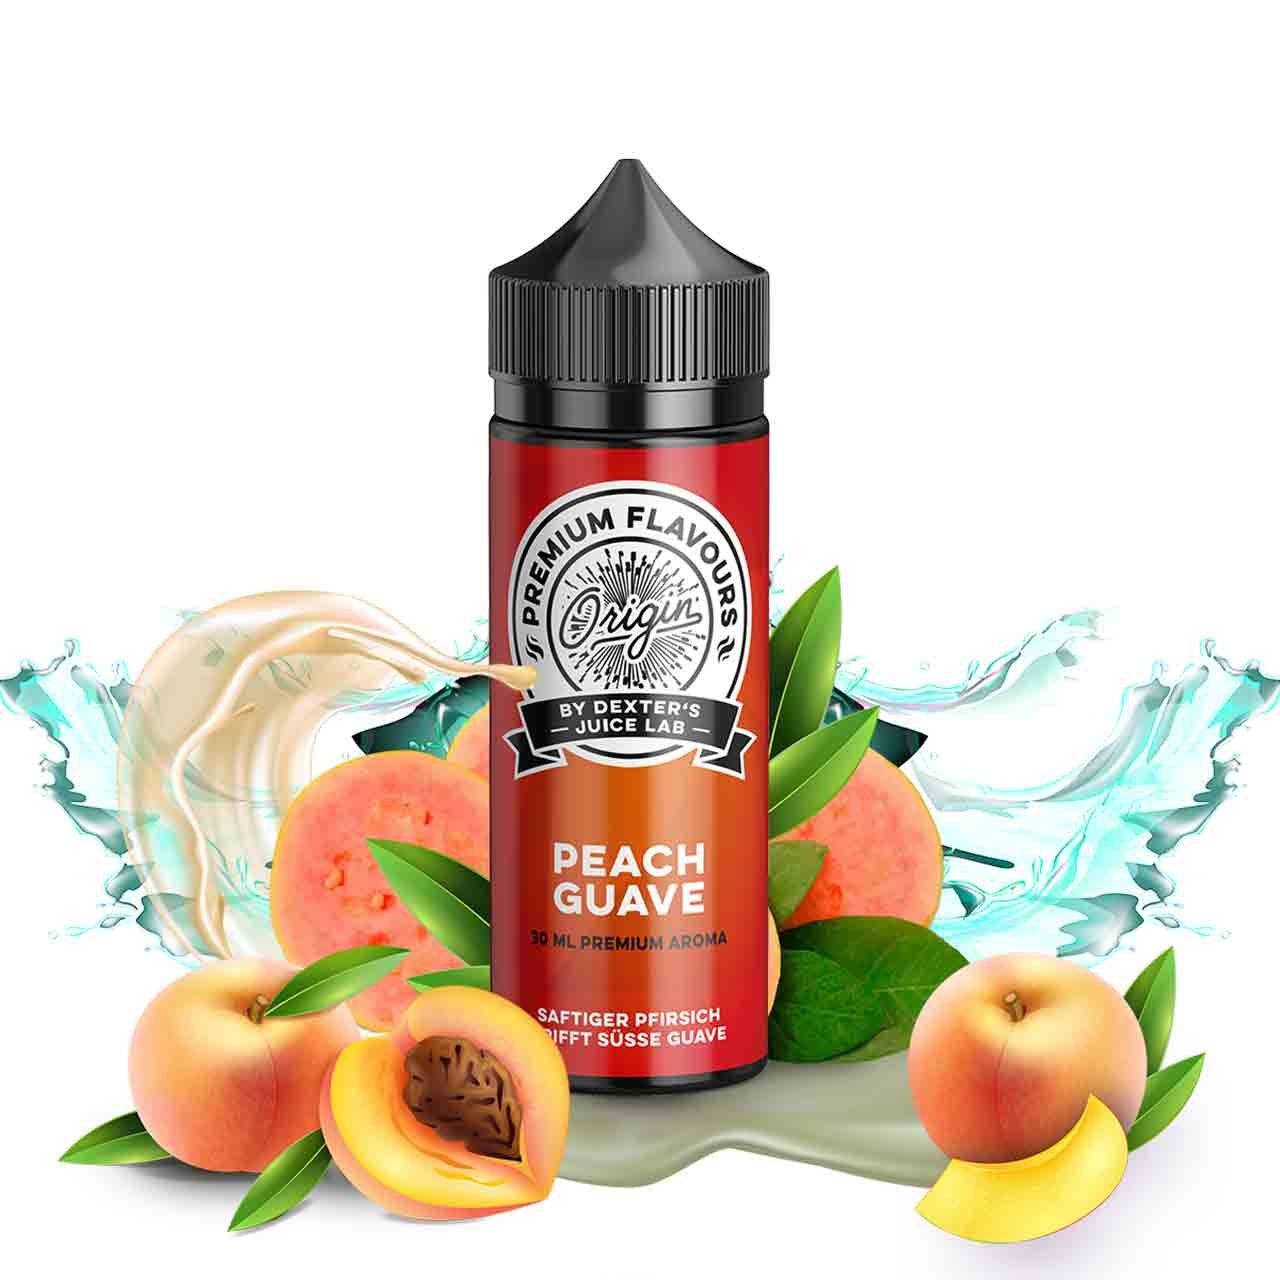 Dexter's Juice Lab Origin Peach Guave Aroma Longfill